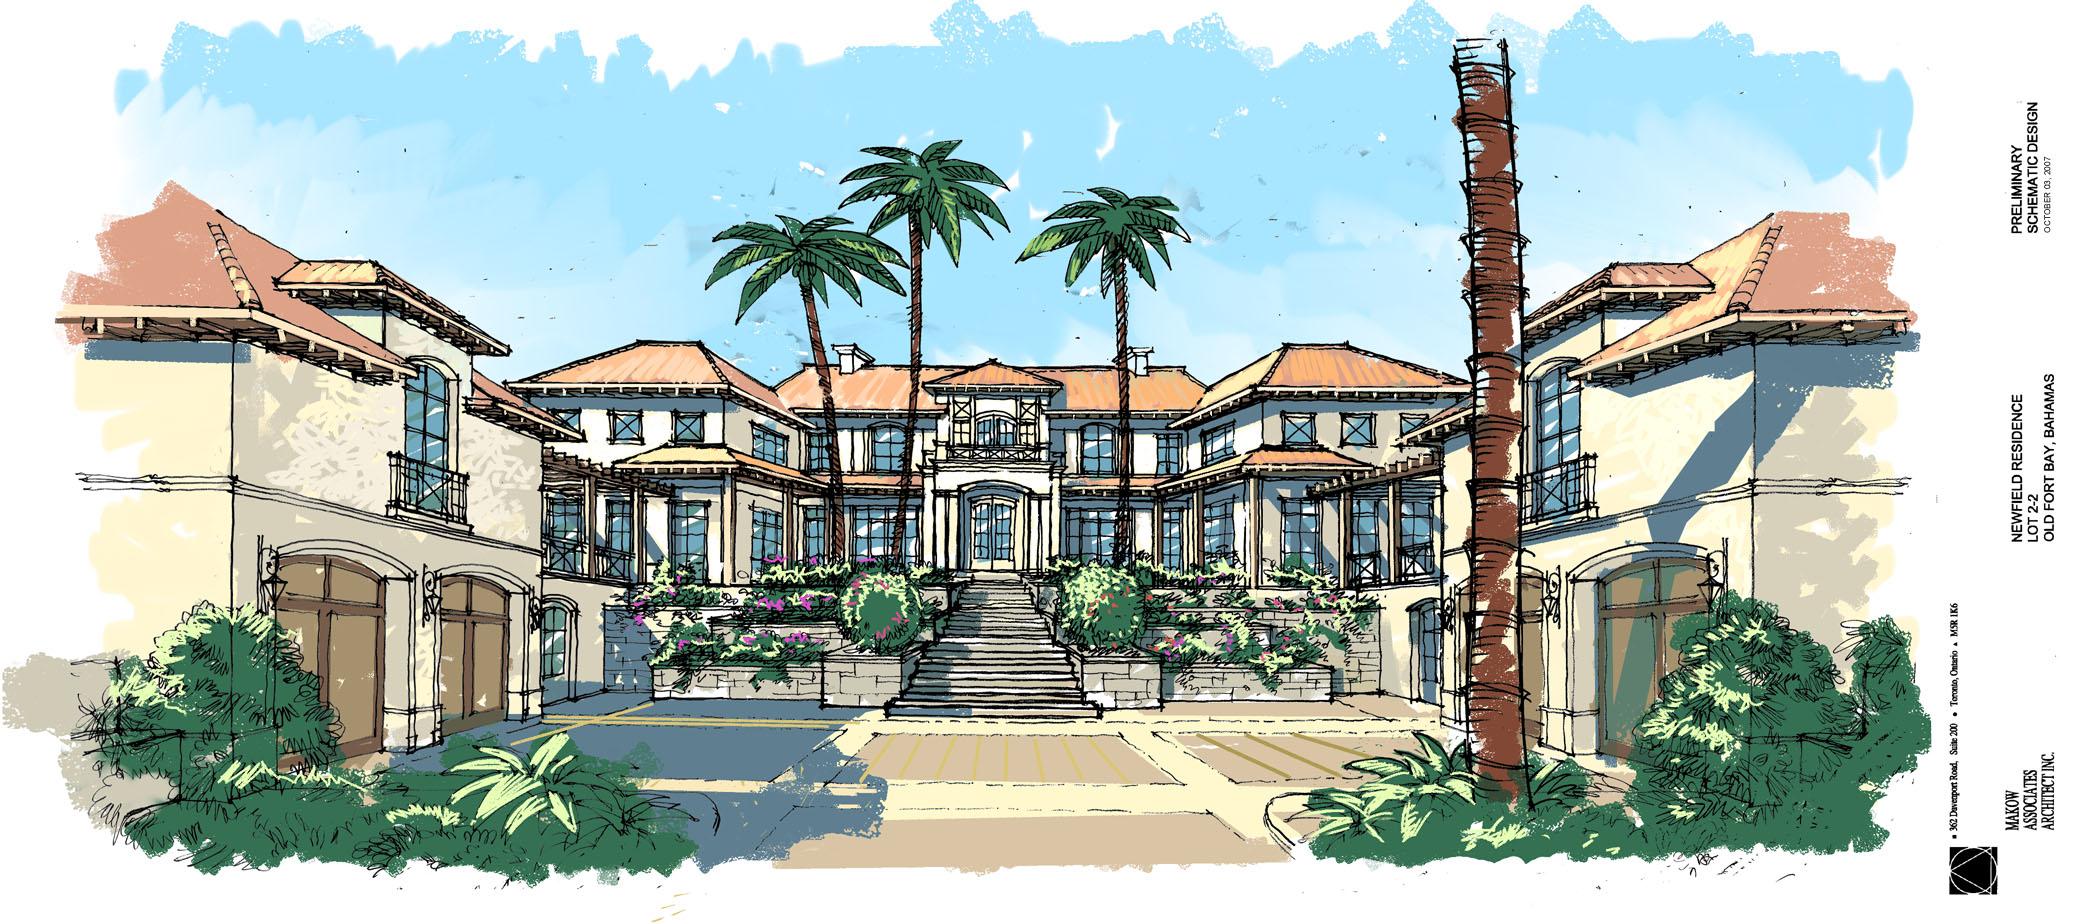 Old Fort Bay, Bahamas Vacation Homes - Makow Architects